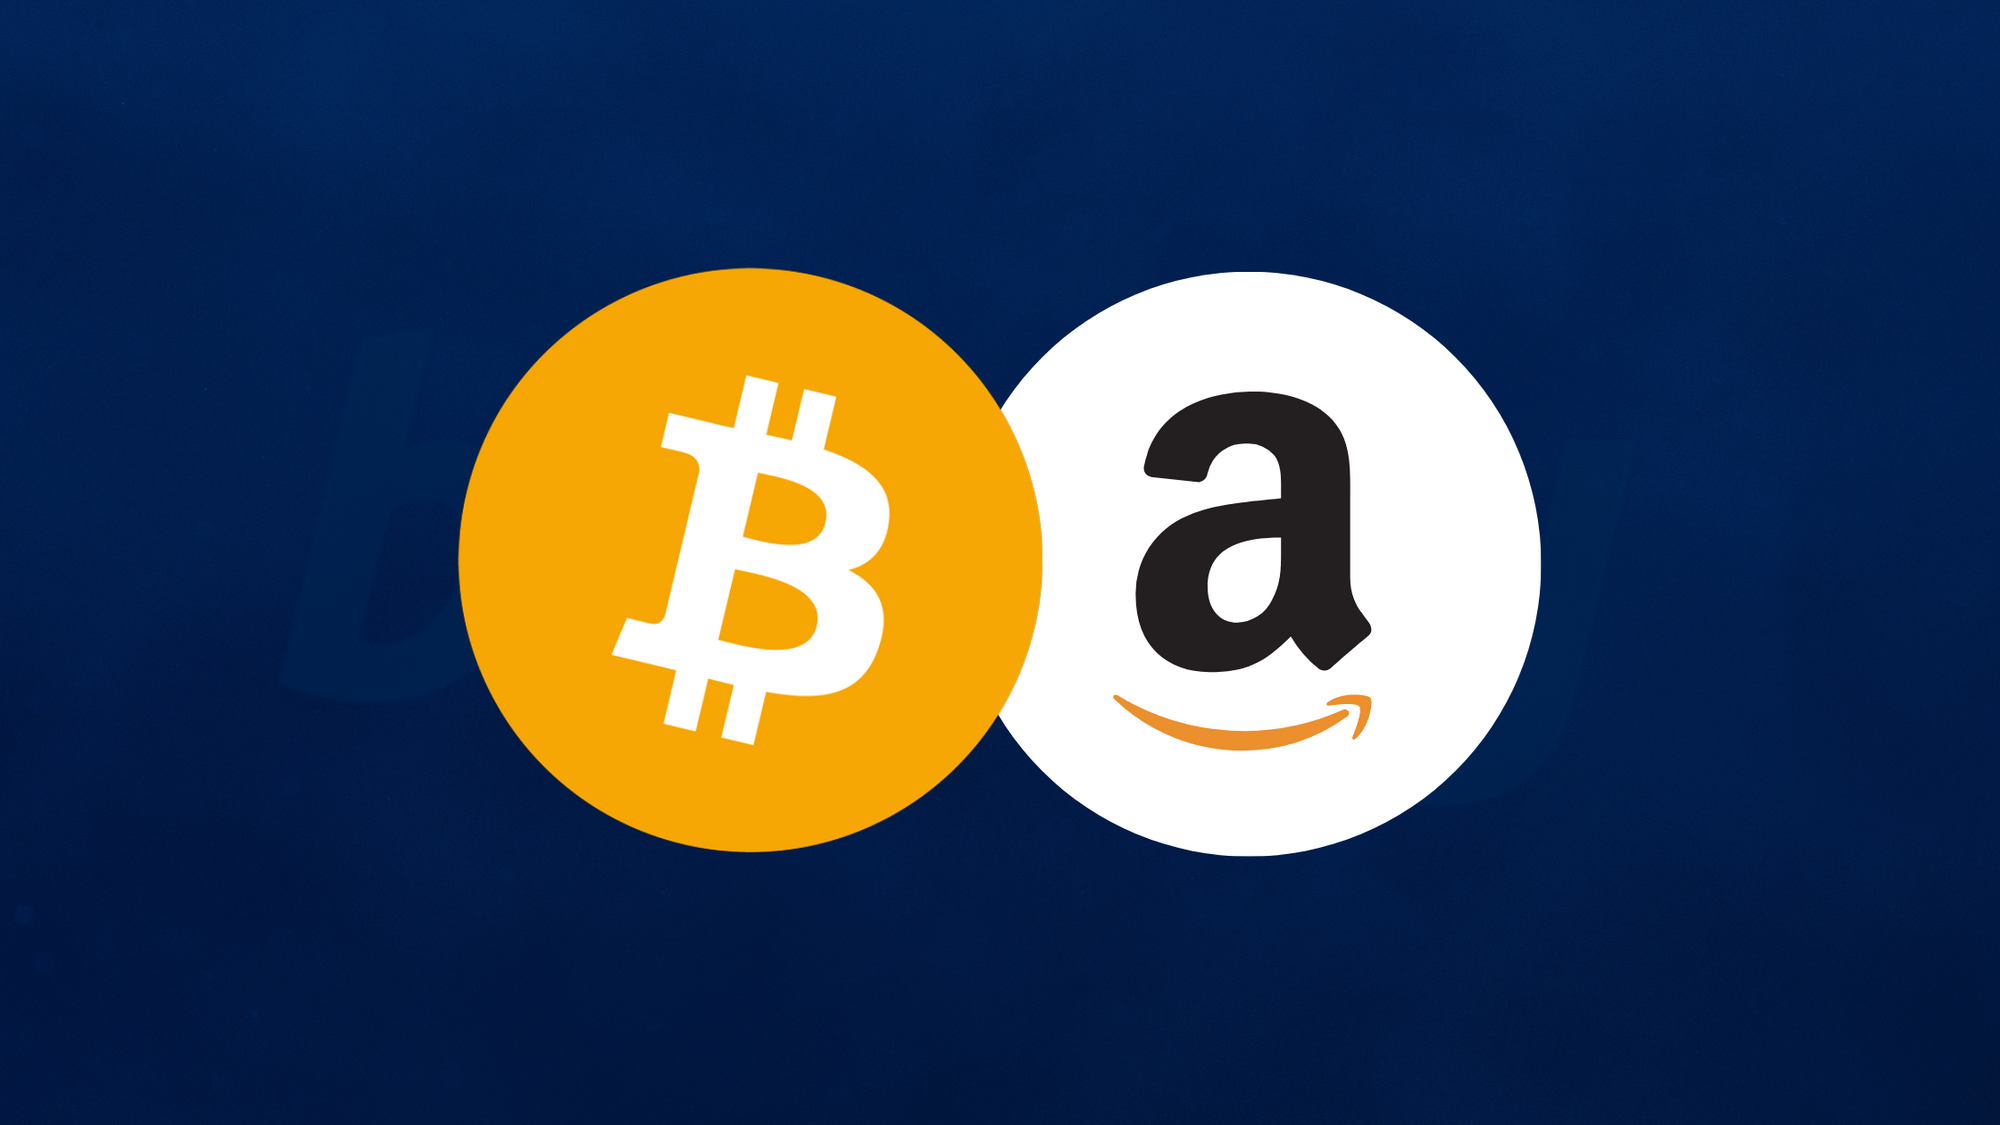 Buying amazon gift card with bitcoin i space майнинг